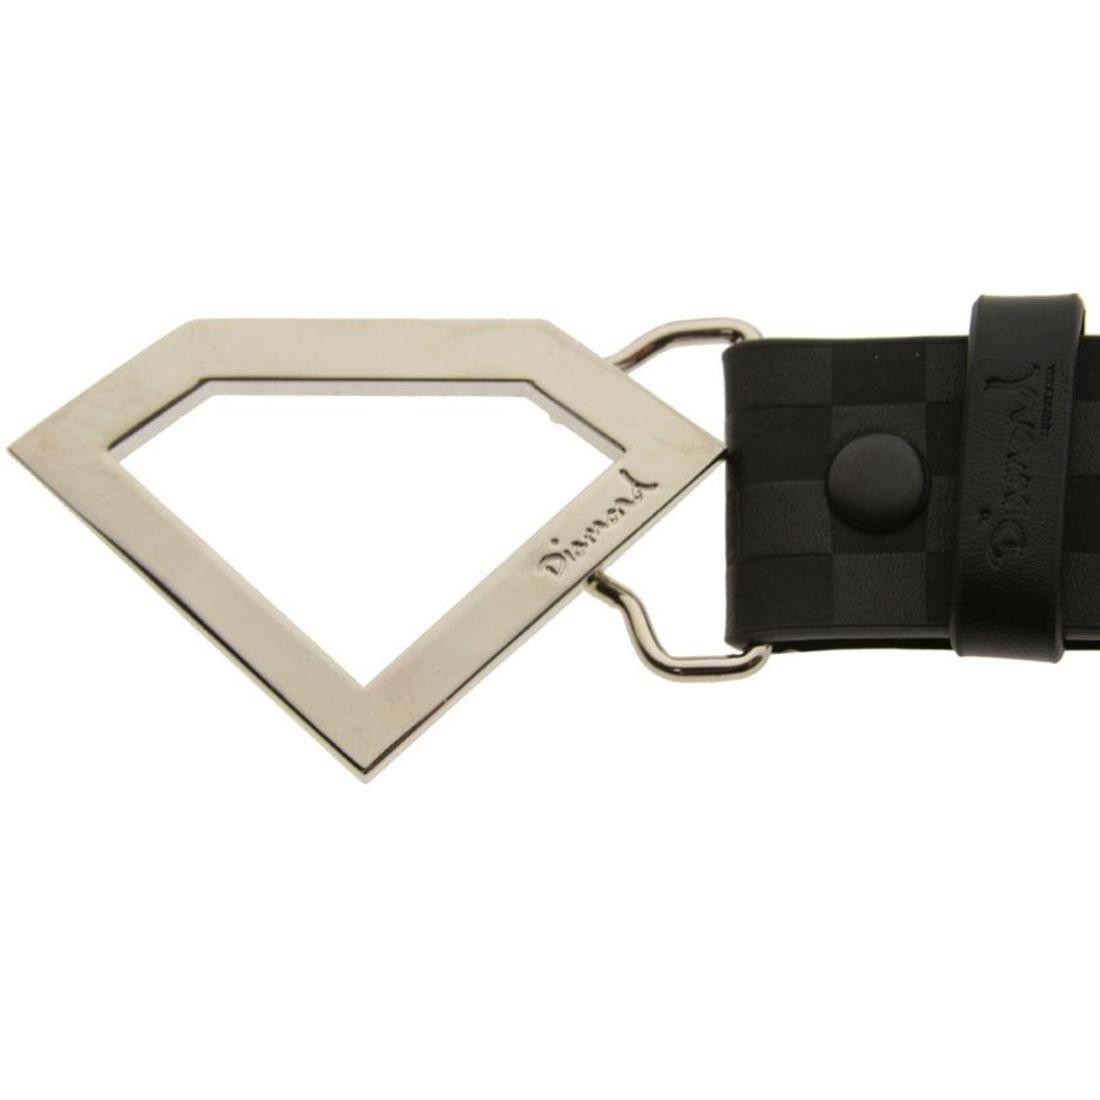 Diamond Supply Co OG Scout Belt (Check Black / Charcoal)